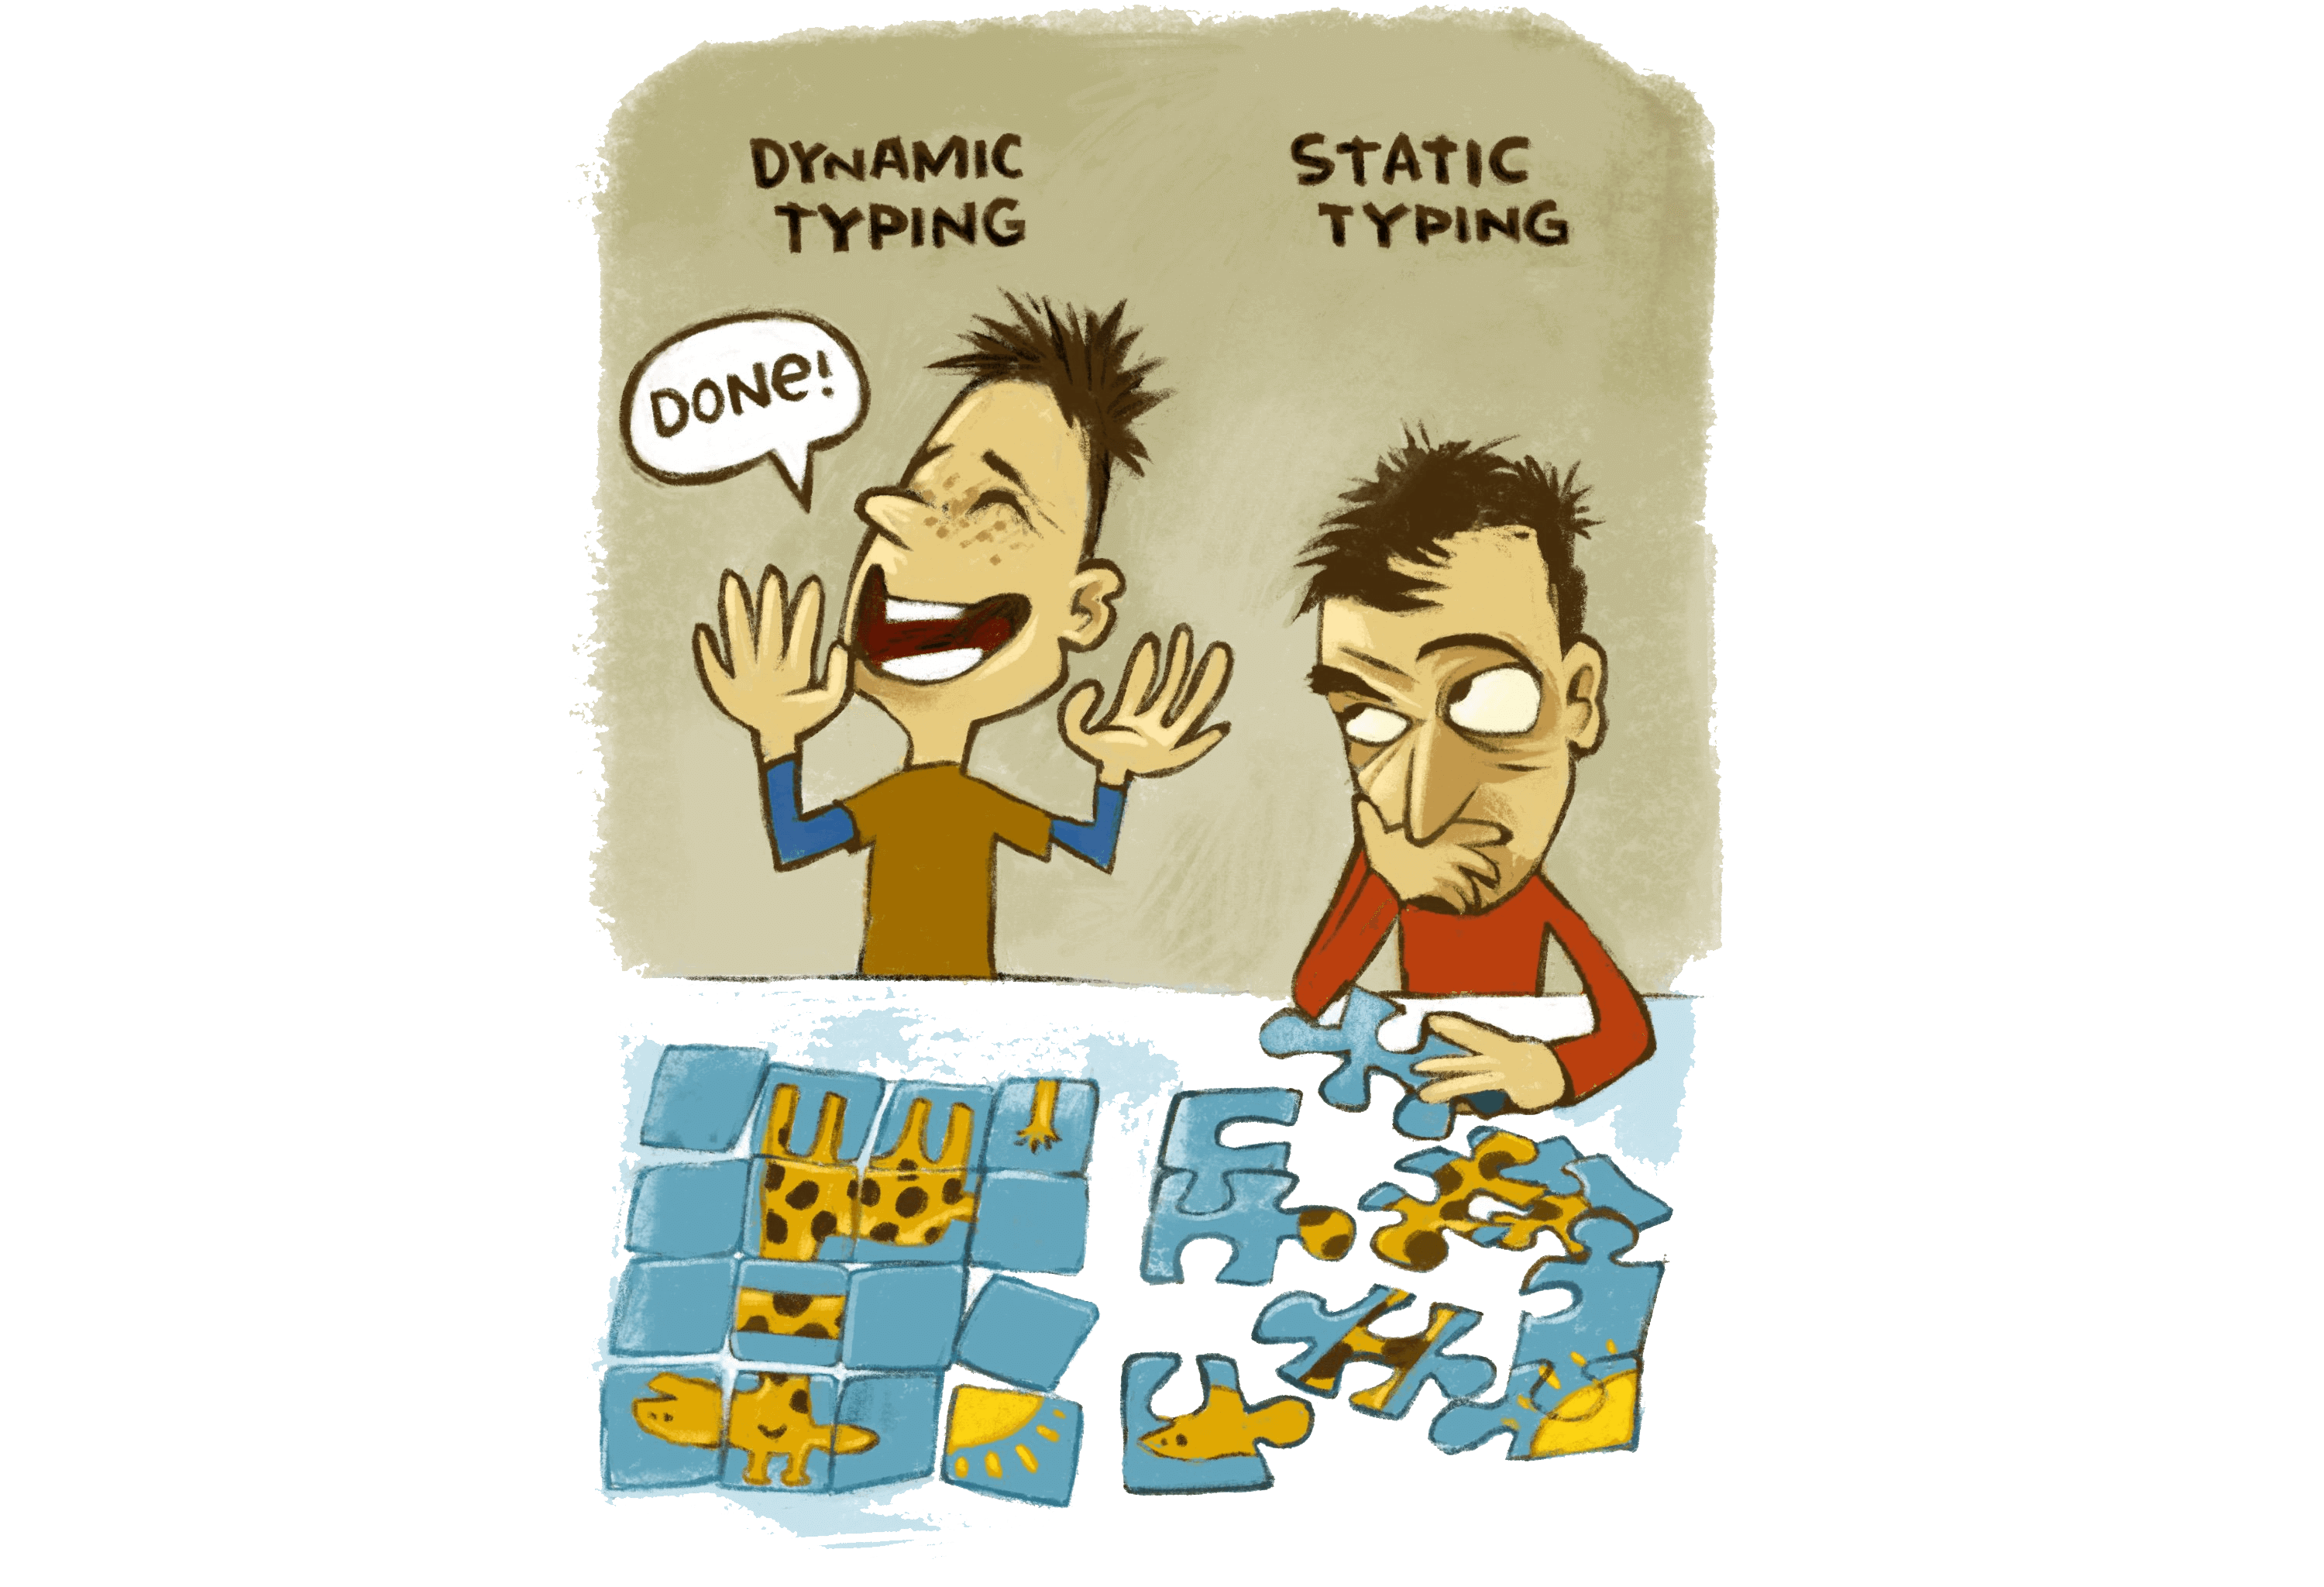 Dynamic Typing vs Static Typing